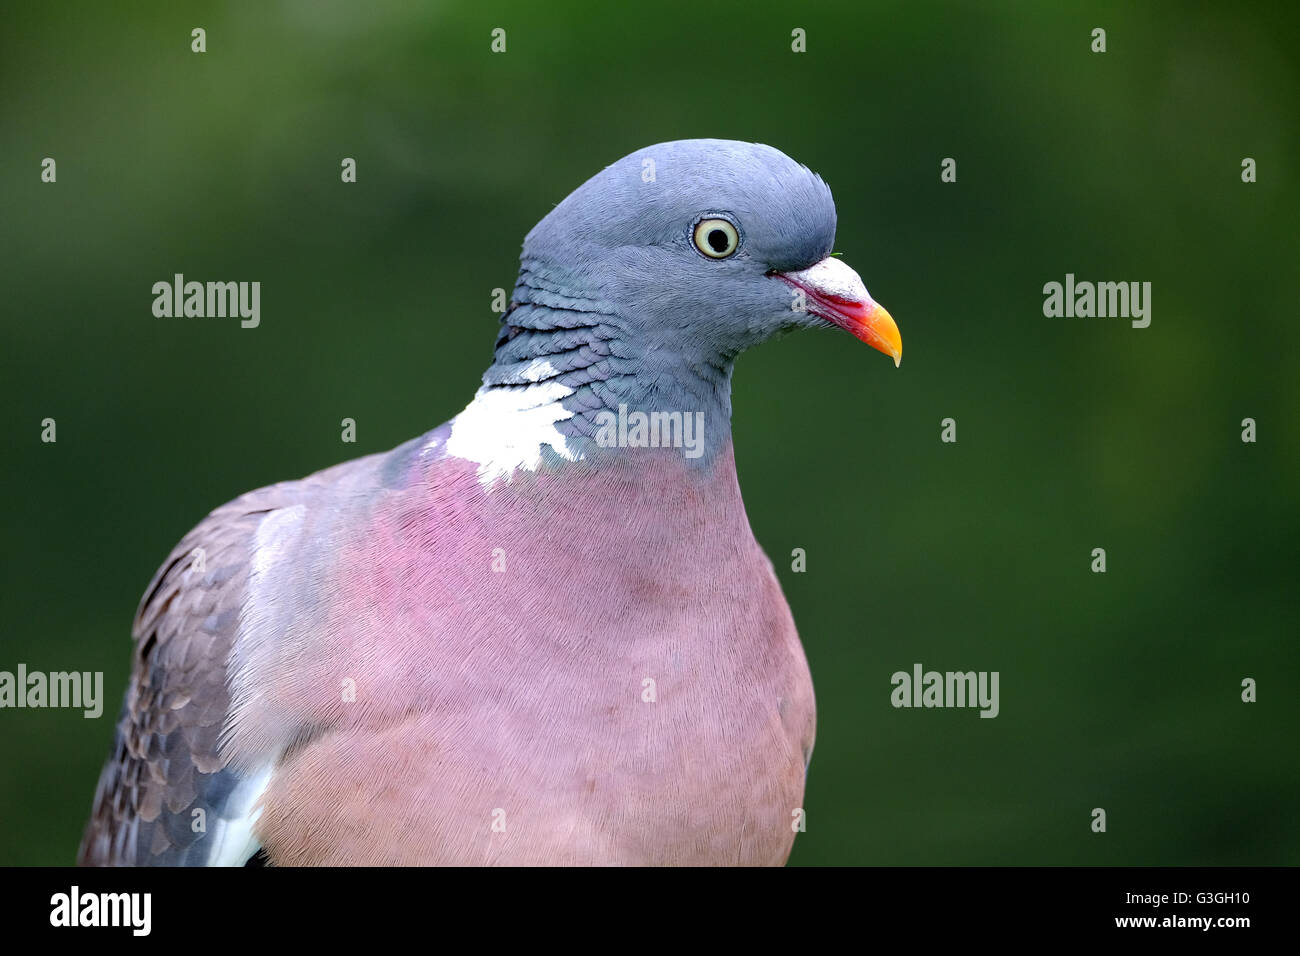 A common wood pigeon (columba palumbus) or culver Stock Photo